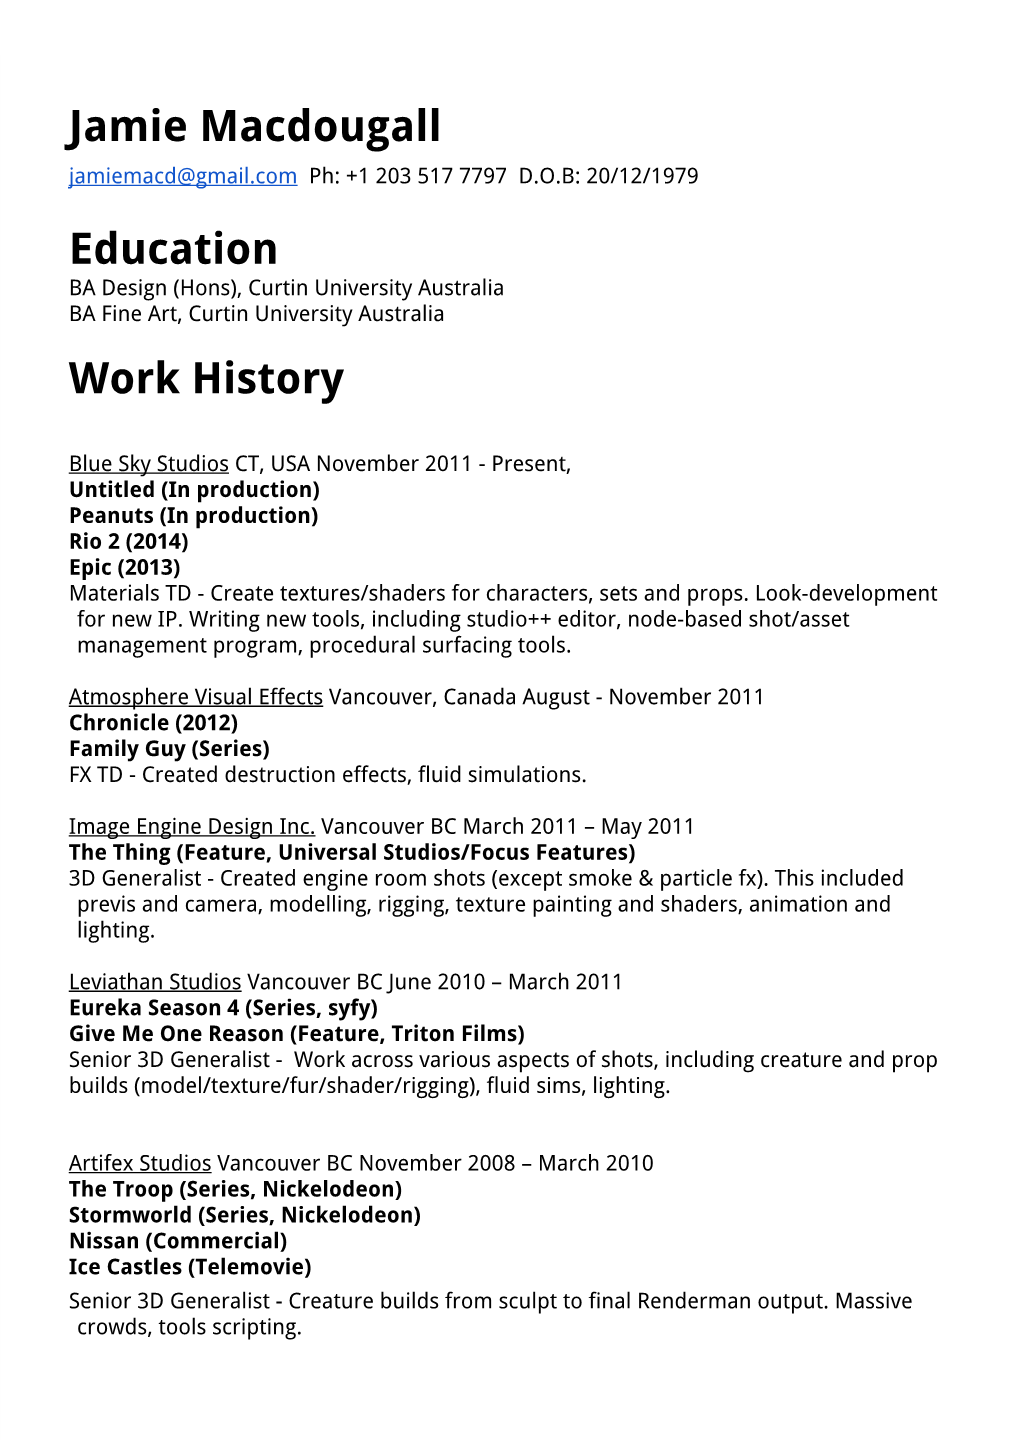 Jamie Macdougall Education Work History